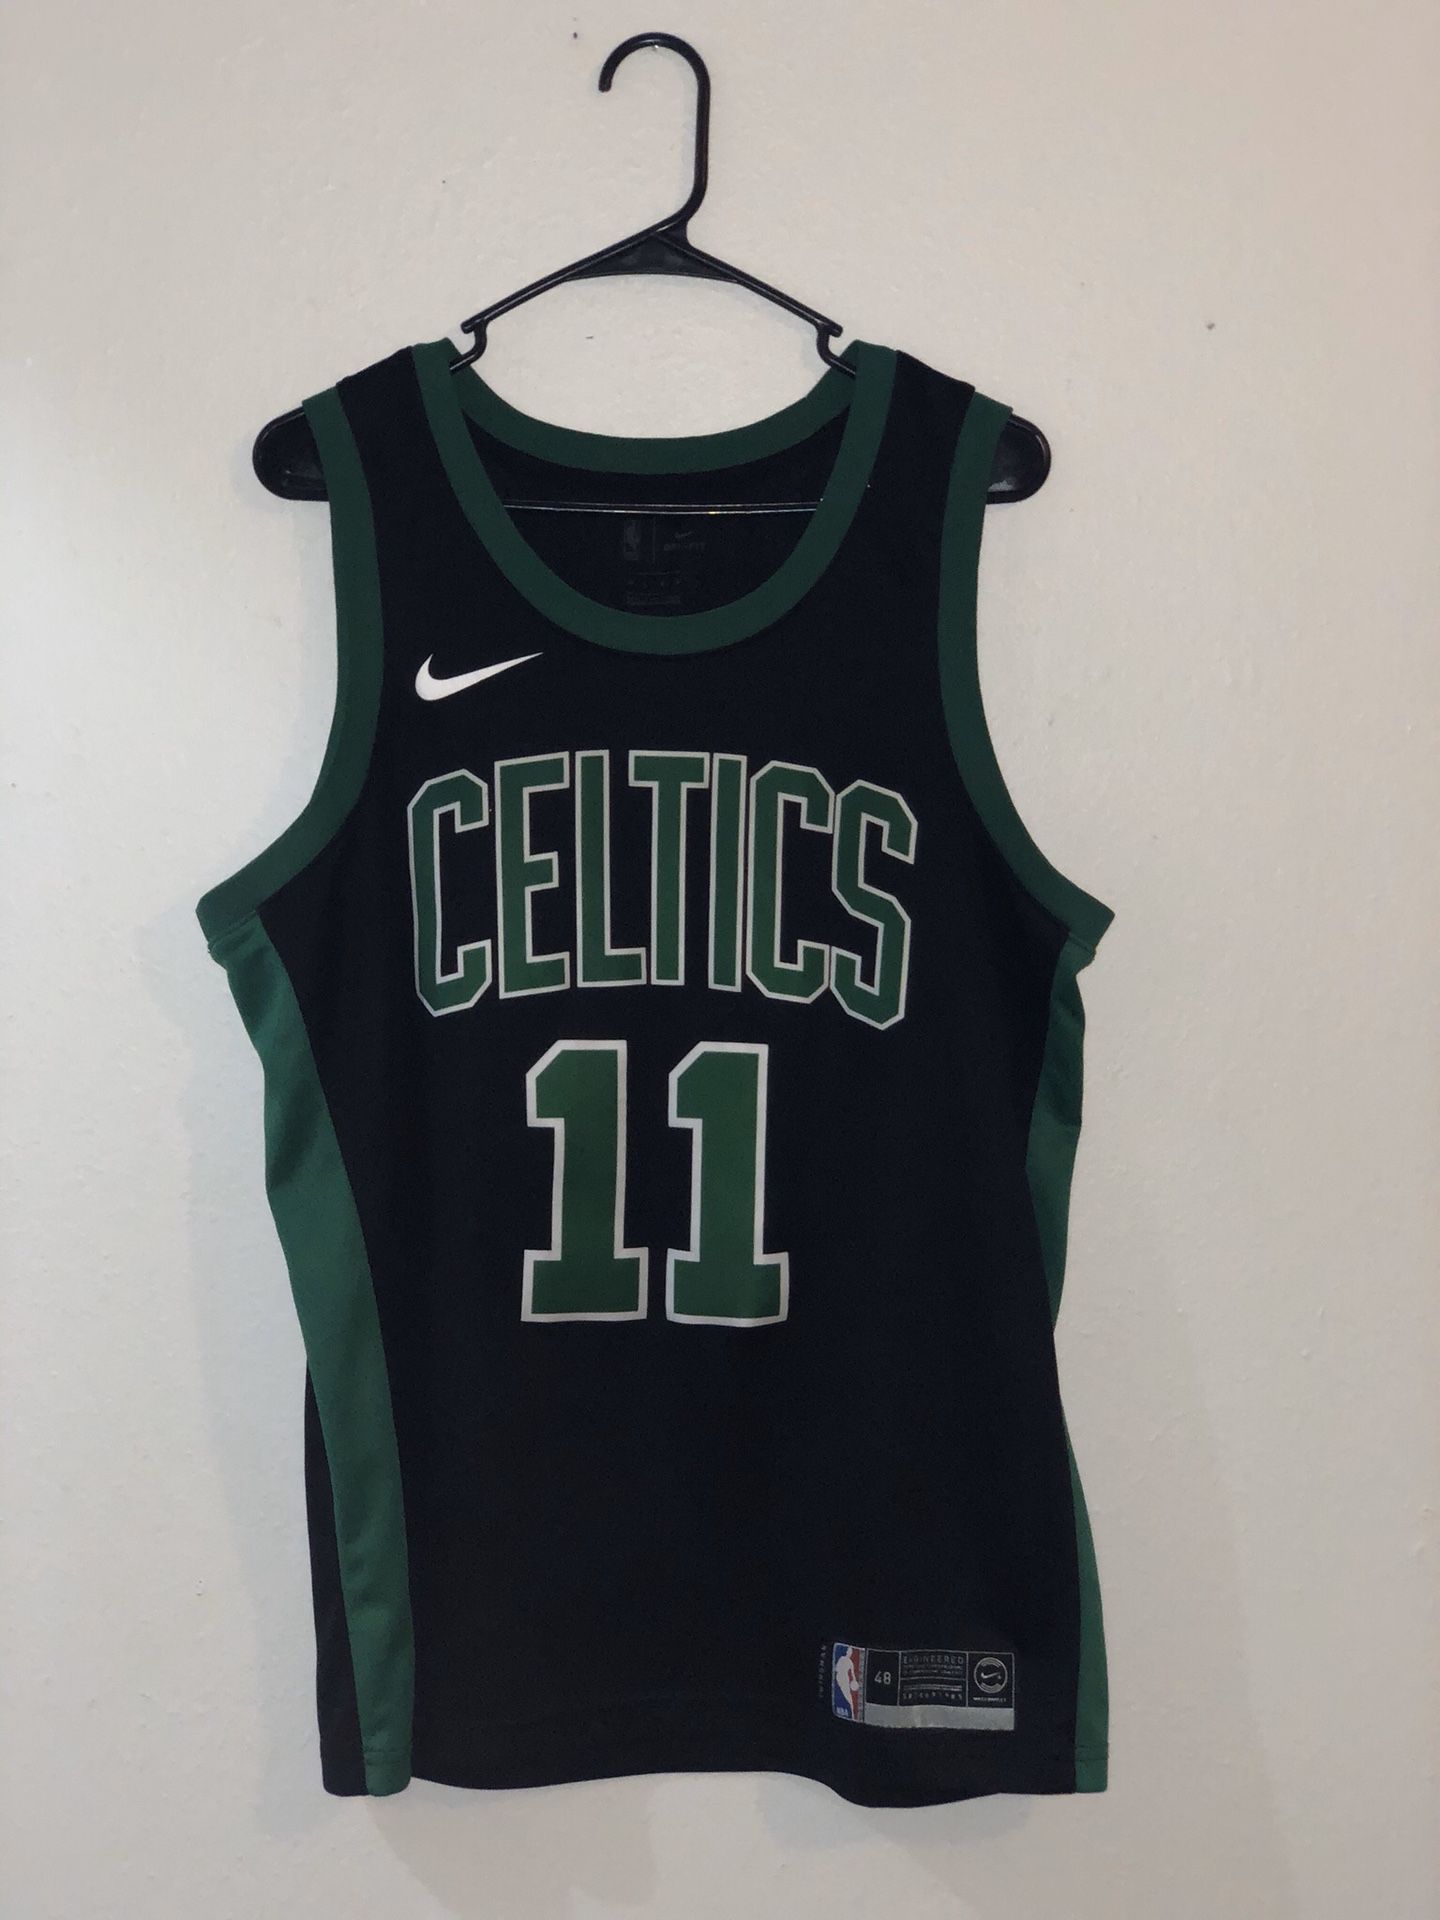 Size Large Men’s Nike Boston Celtics Kyrie Irving #11 jersey